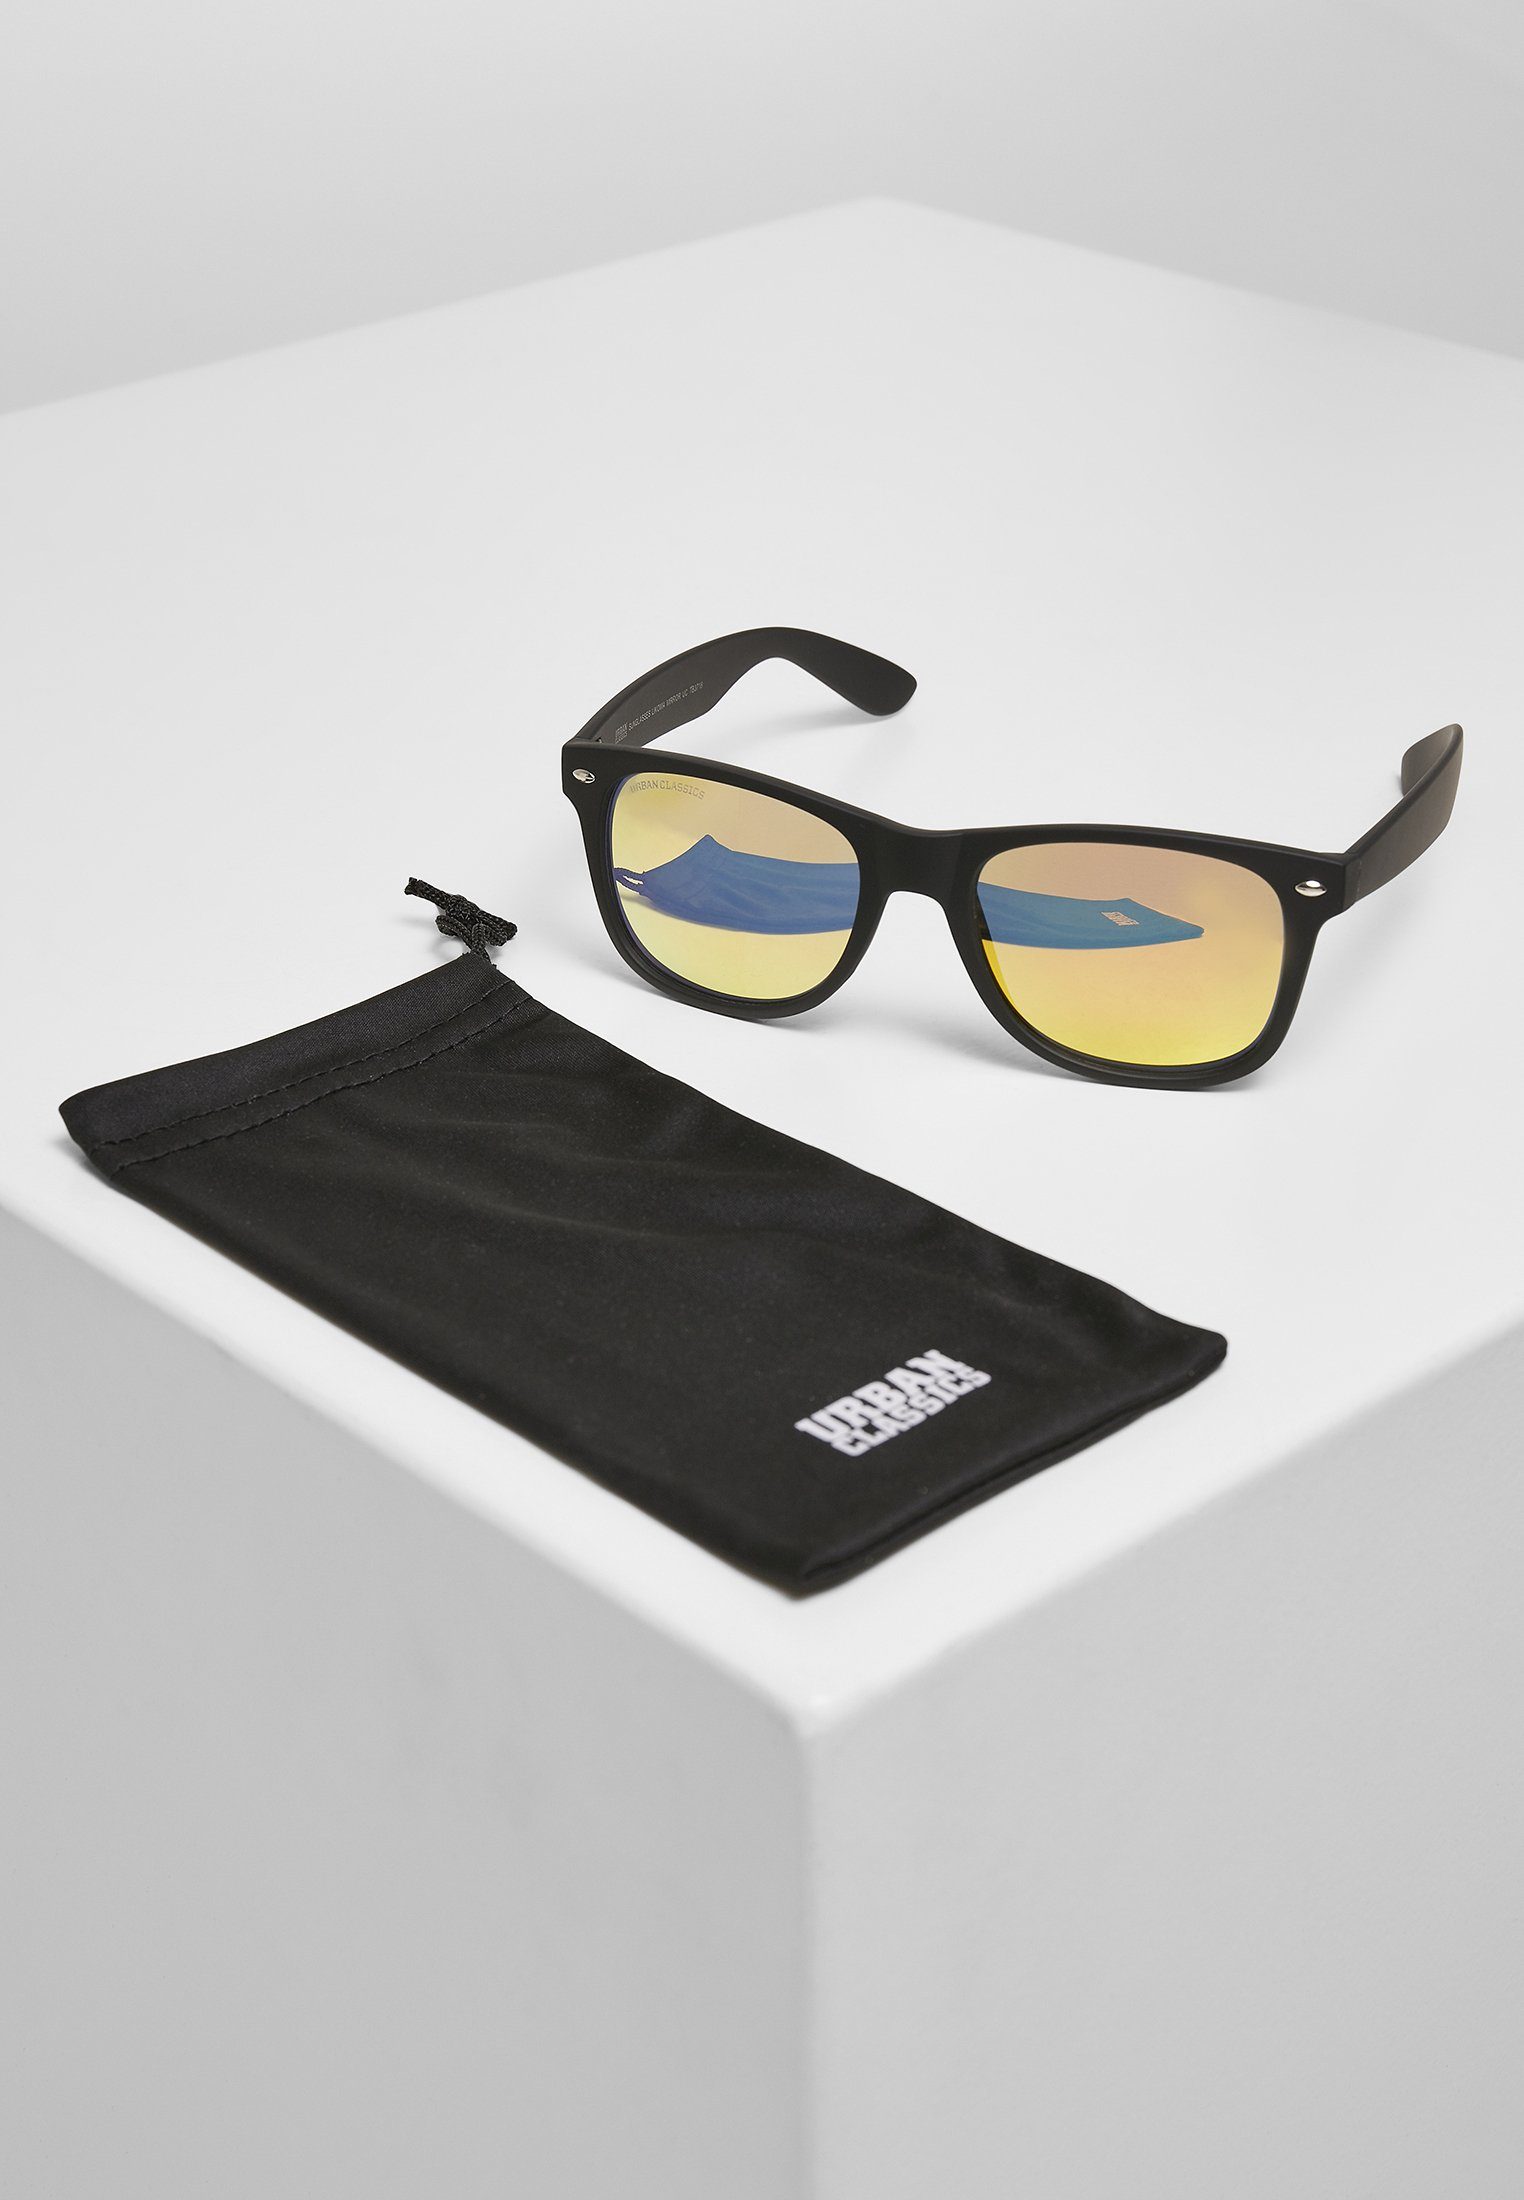 Sonnenbrille Sunglasses URBAN black/orange Likoma UC Accessoires CLASSICS Mirror